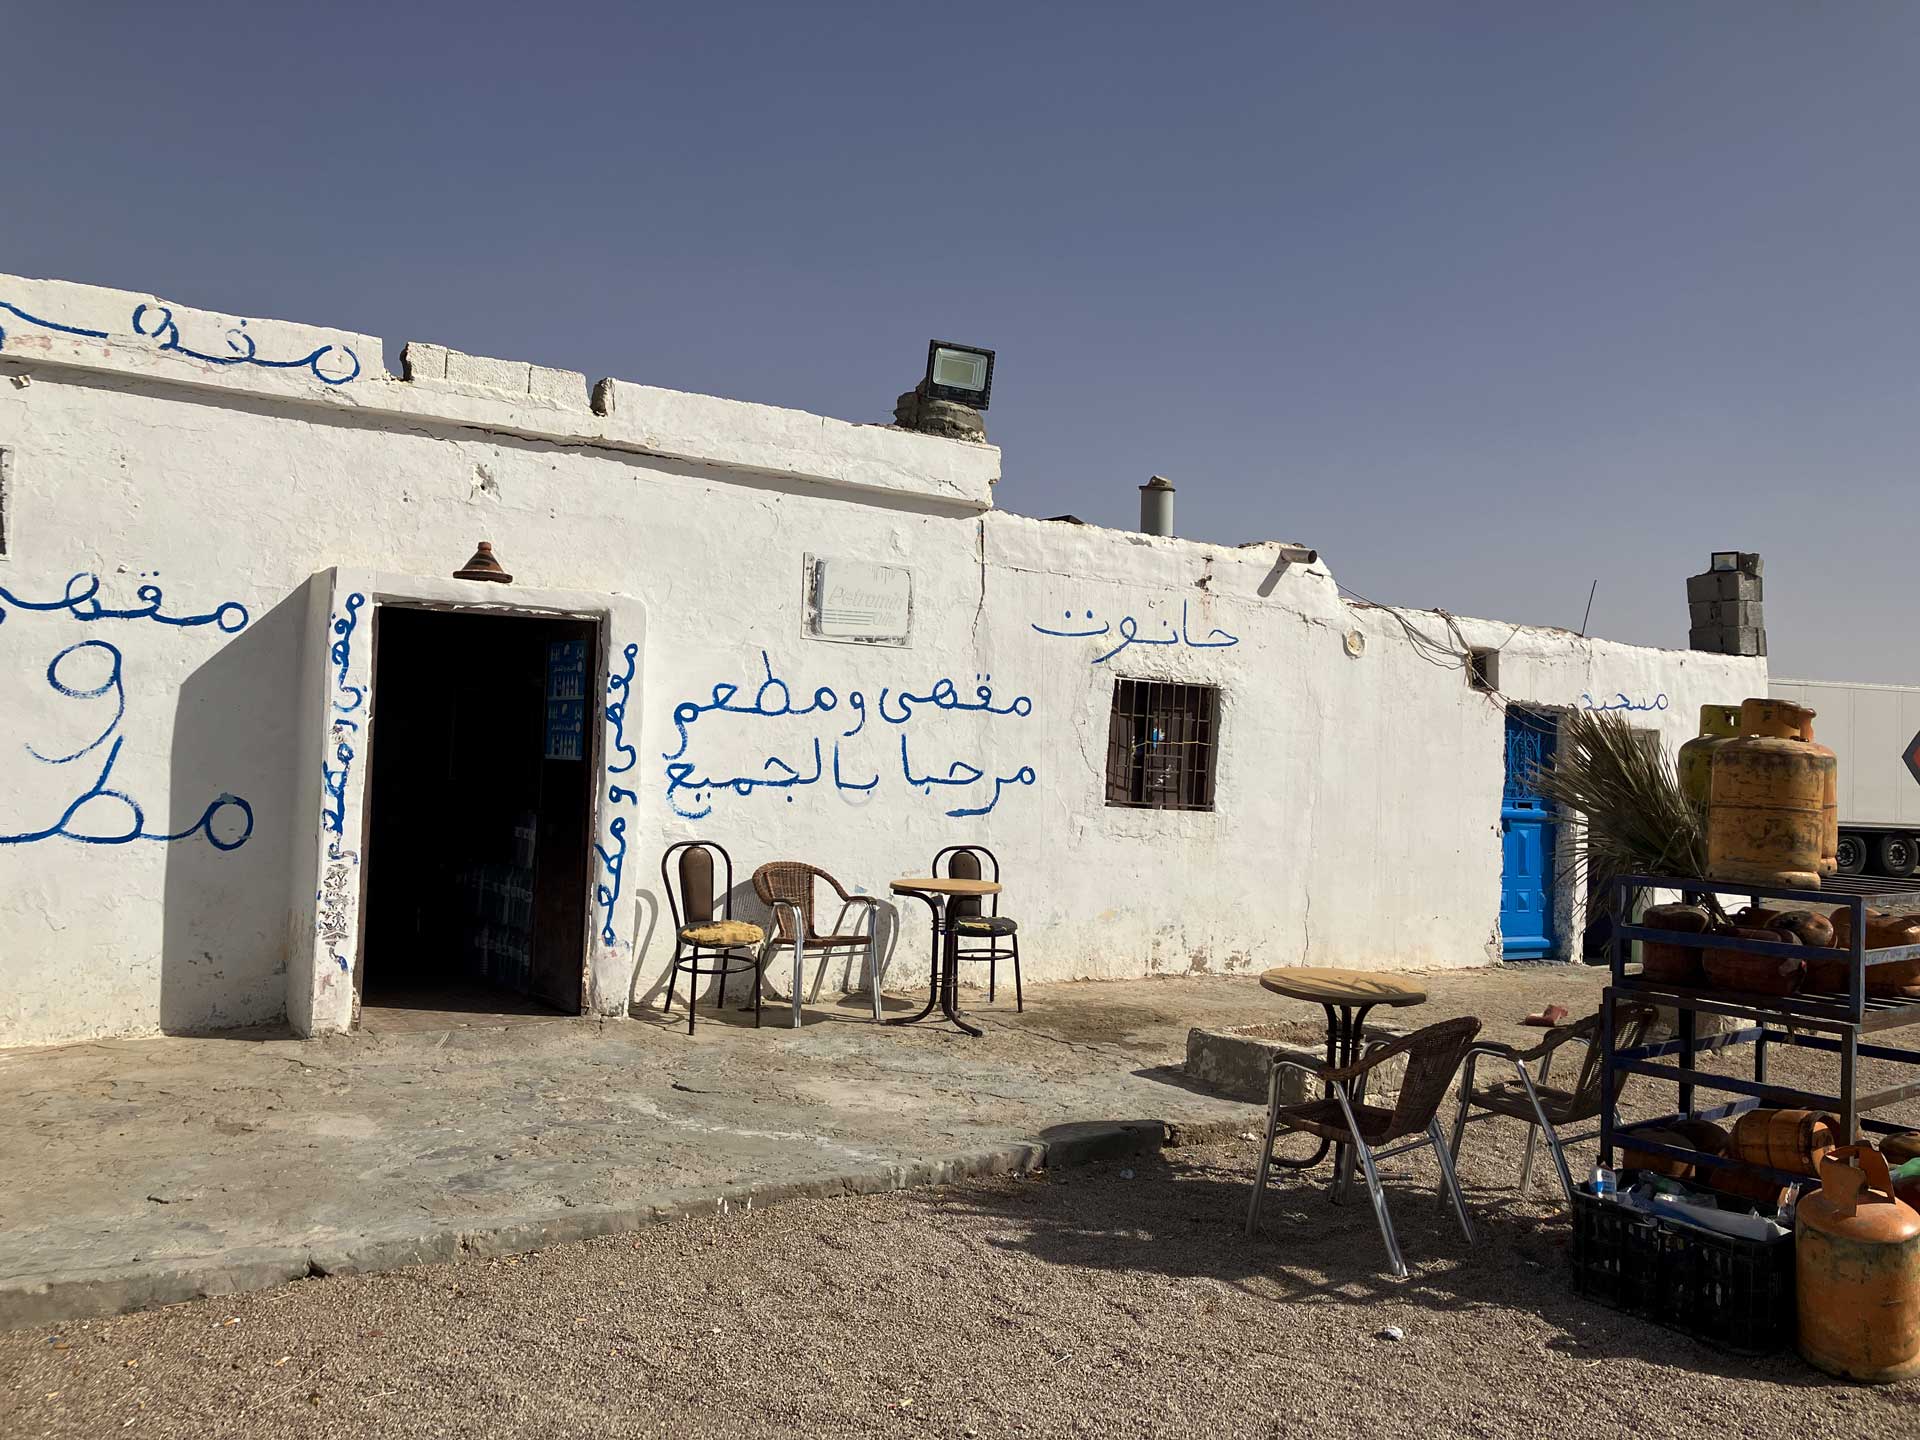 oáza in Western Sahara